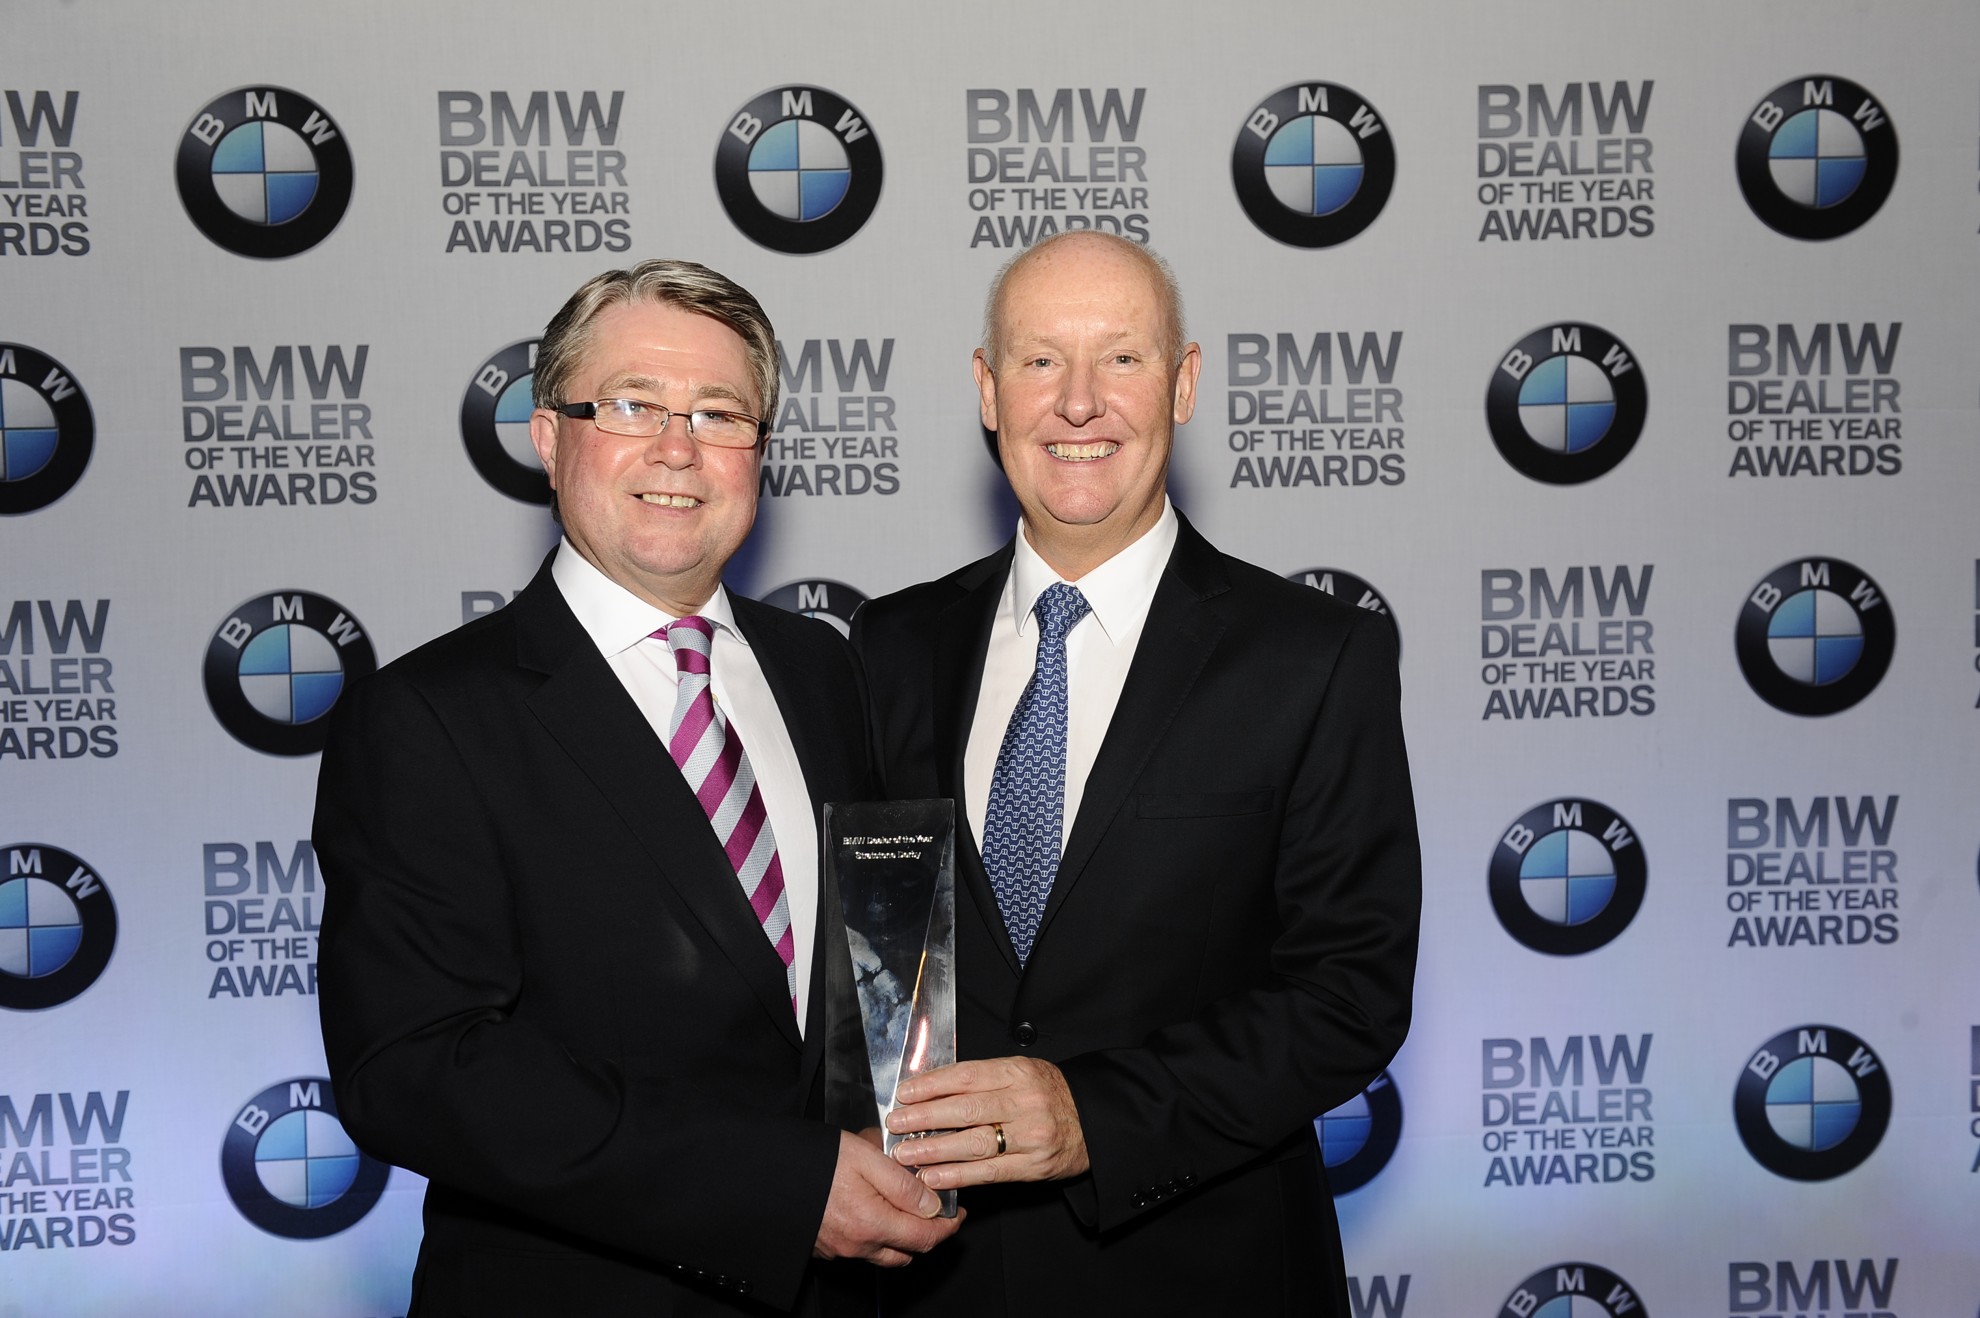 BMW Group UK announces 2012 BMW Dealer Award winners